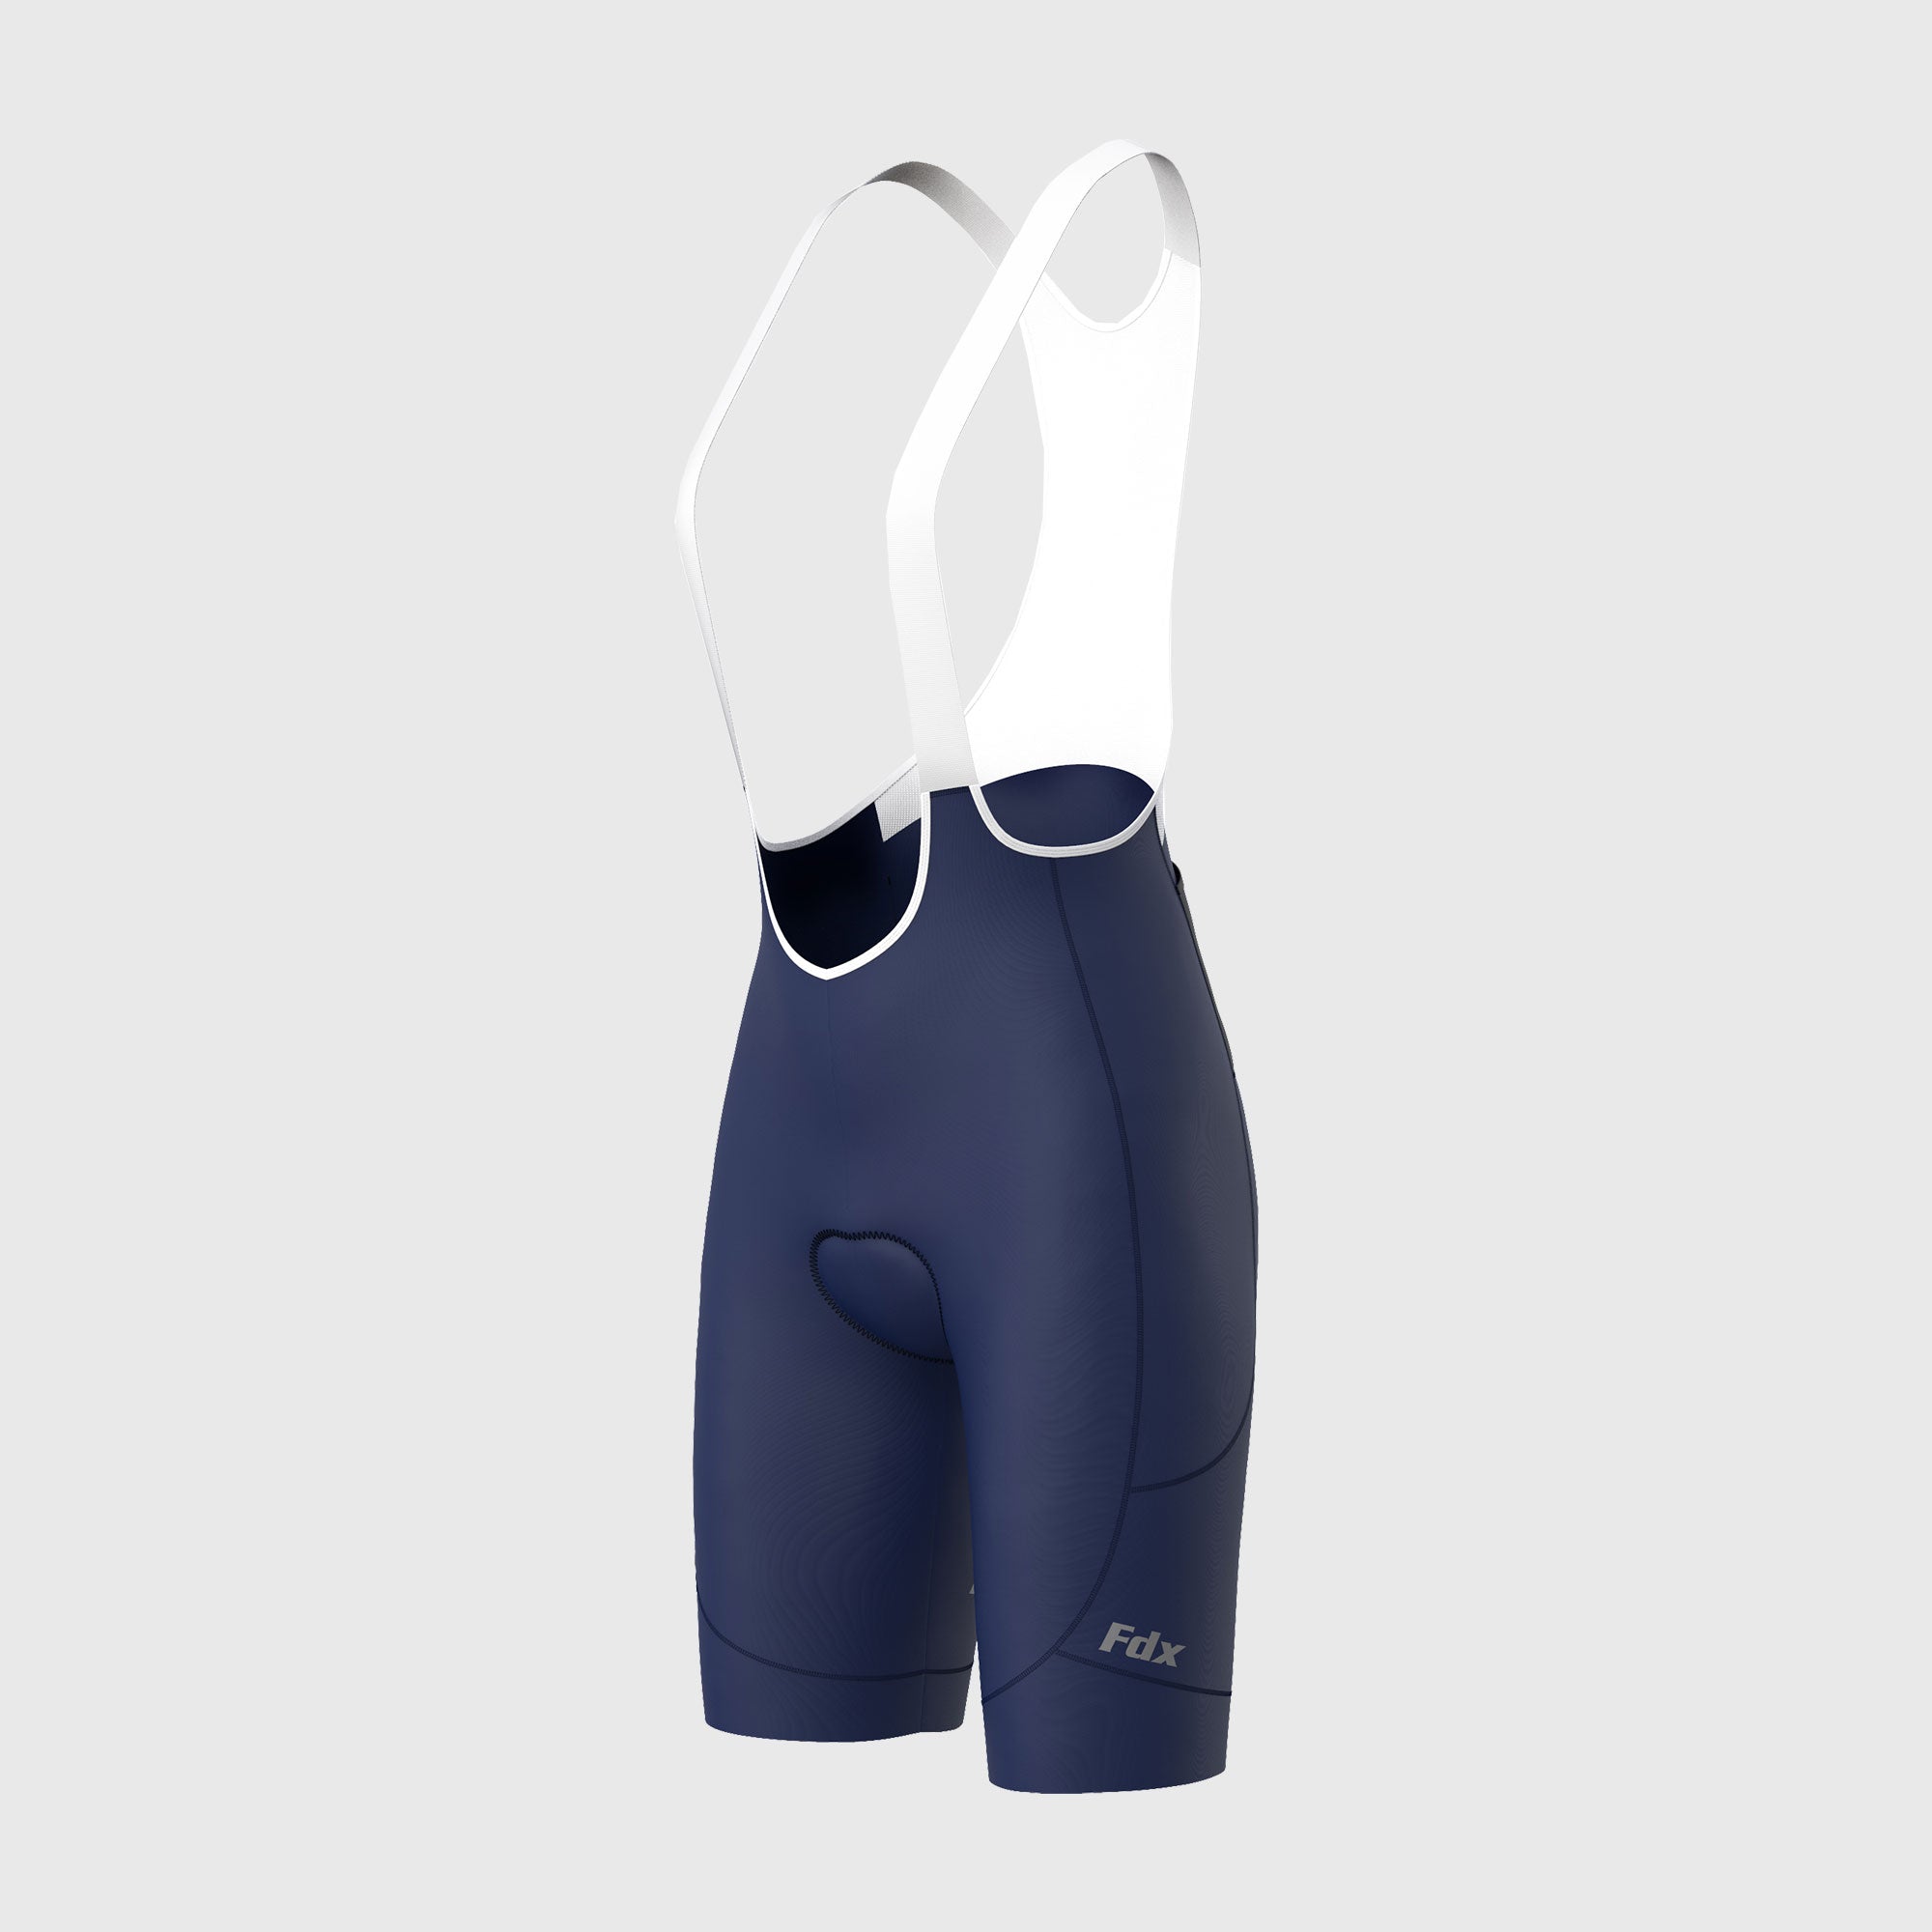 Fdx Women's Blue Gel Padded Cycling Bib Shorts For Summer Best Breathable Outdoor Road Bike Short Length Bib - Duo